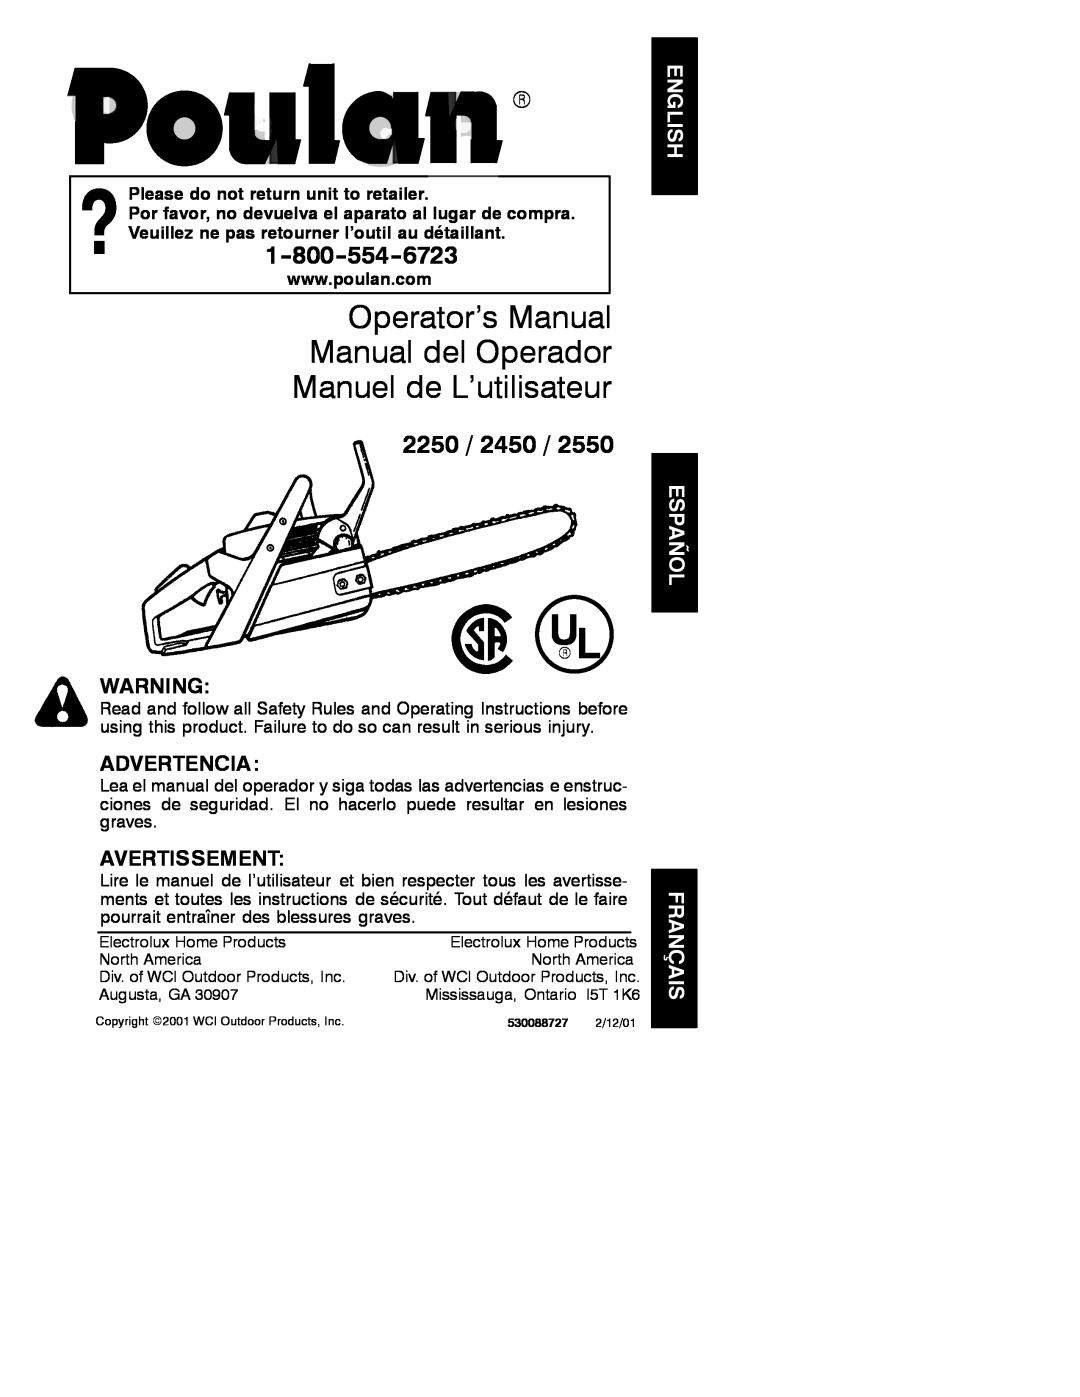 Poulan 2001-02 manual Operator’s Manual Manual del Operador, Manuel de L’utilisateur, 2250, Advertencia, Avertissement 